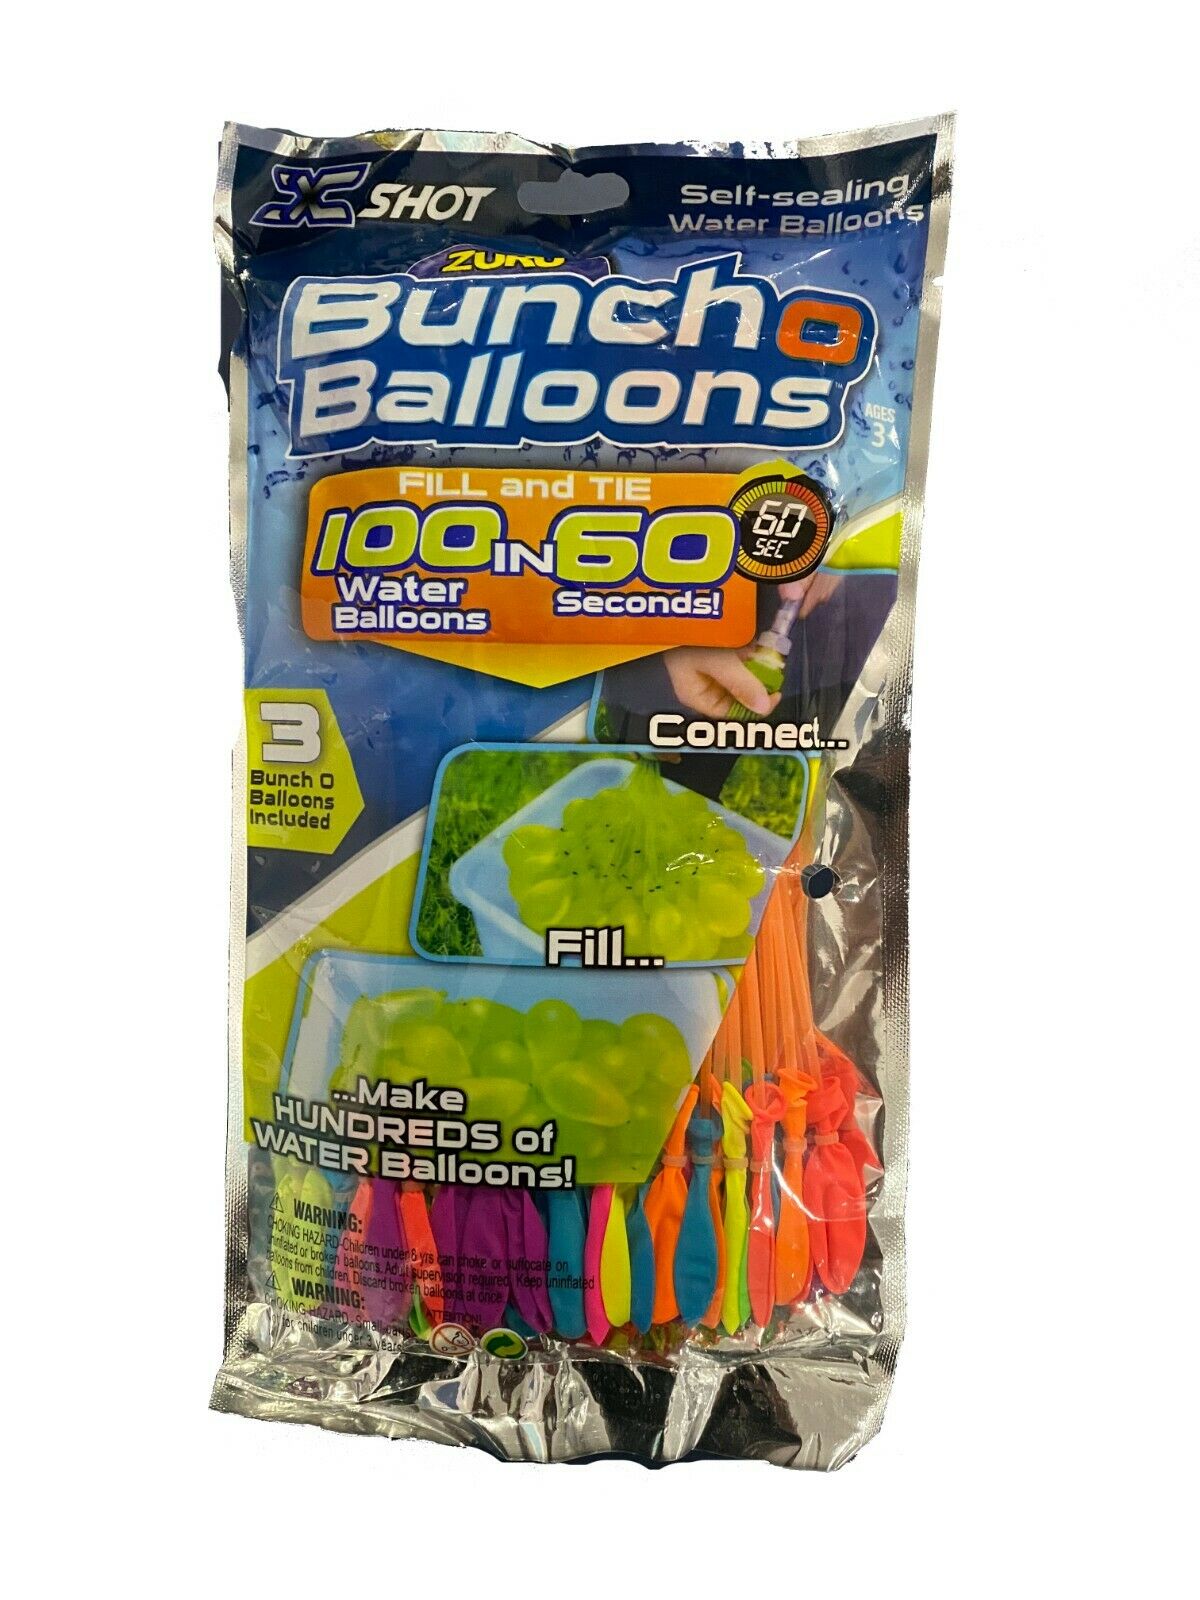 Zuru Bunch O Balloons 1 Package Of 100 Self Sealing Water Balloons Free Shipping